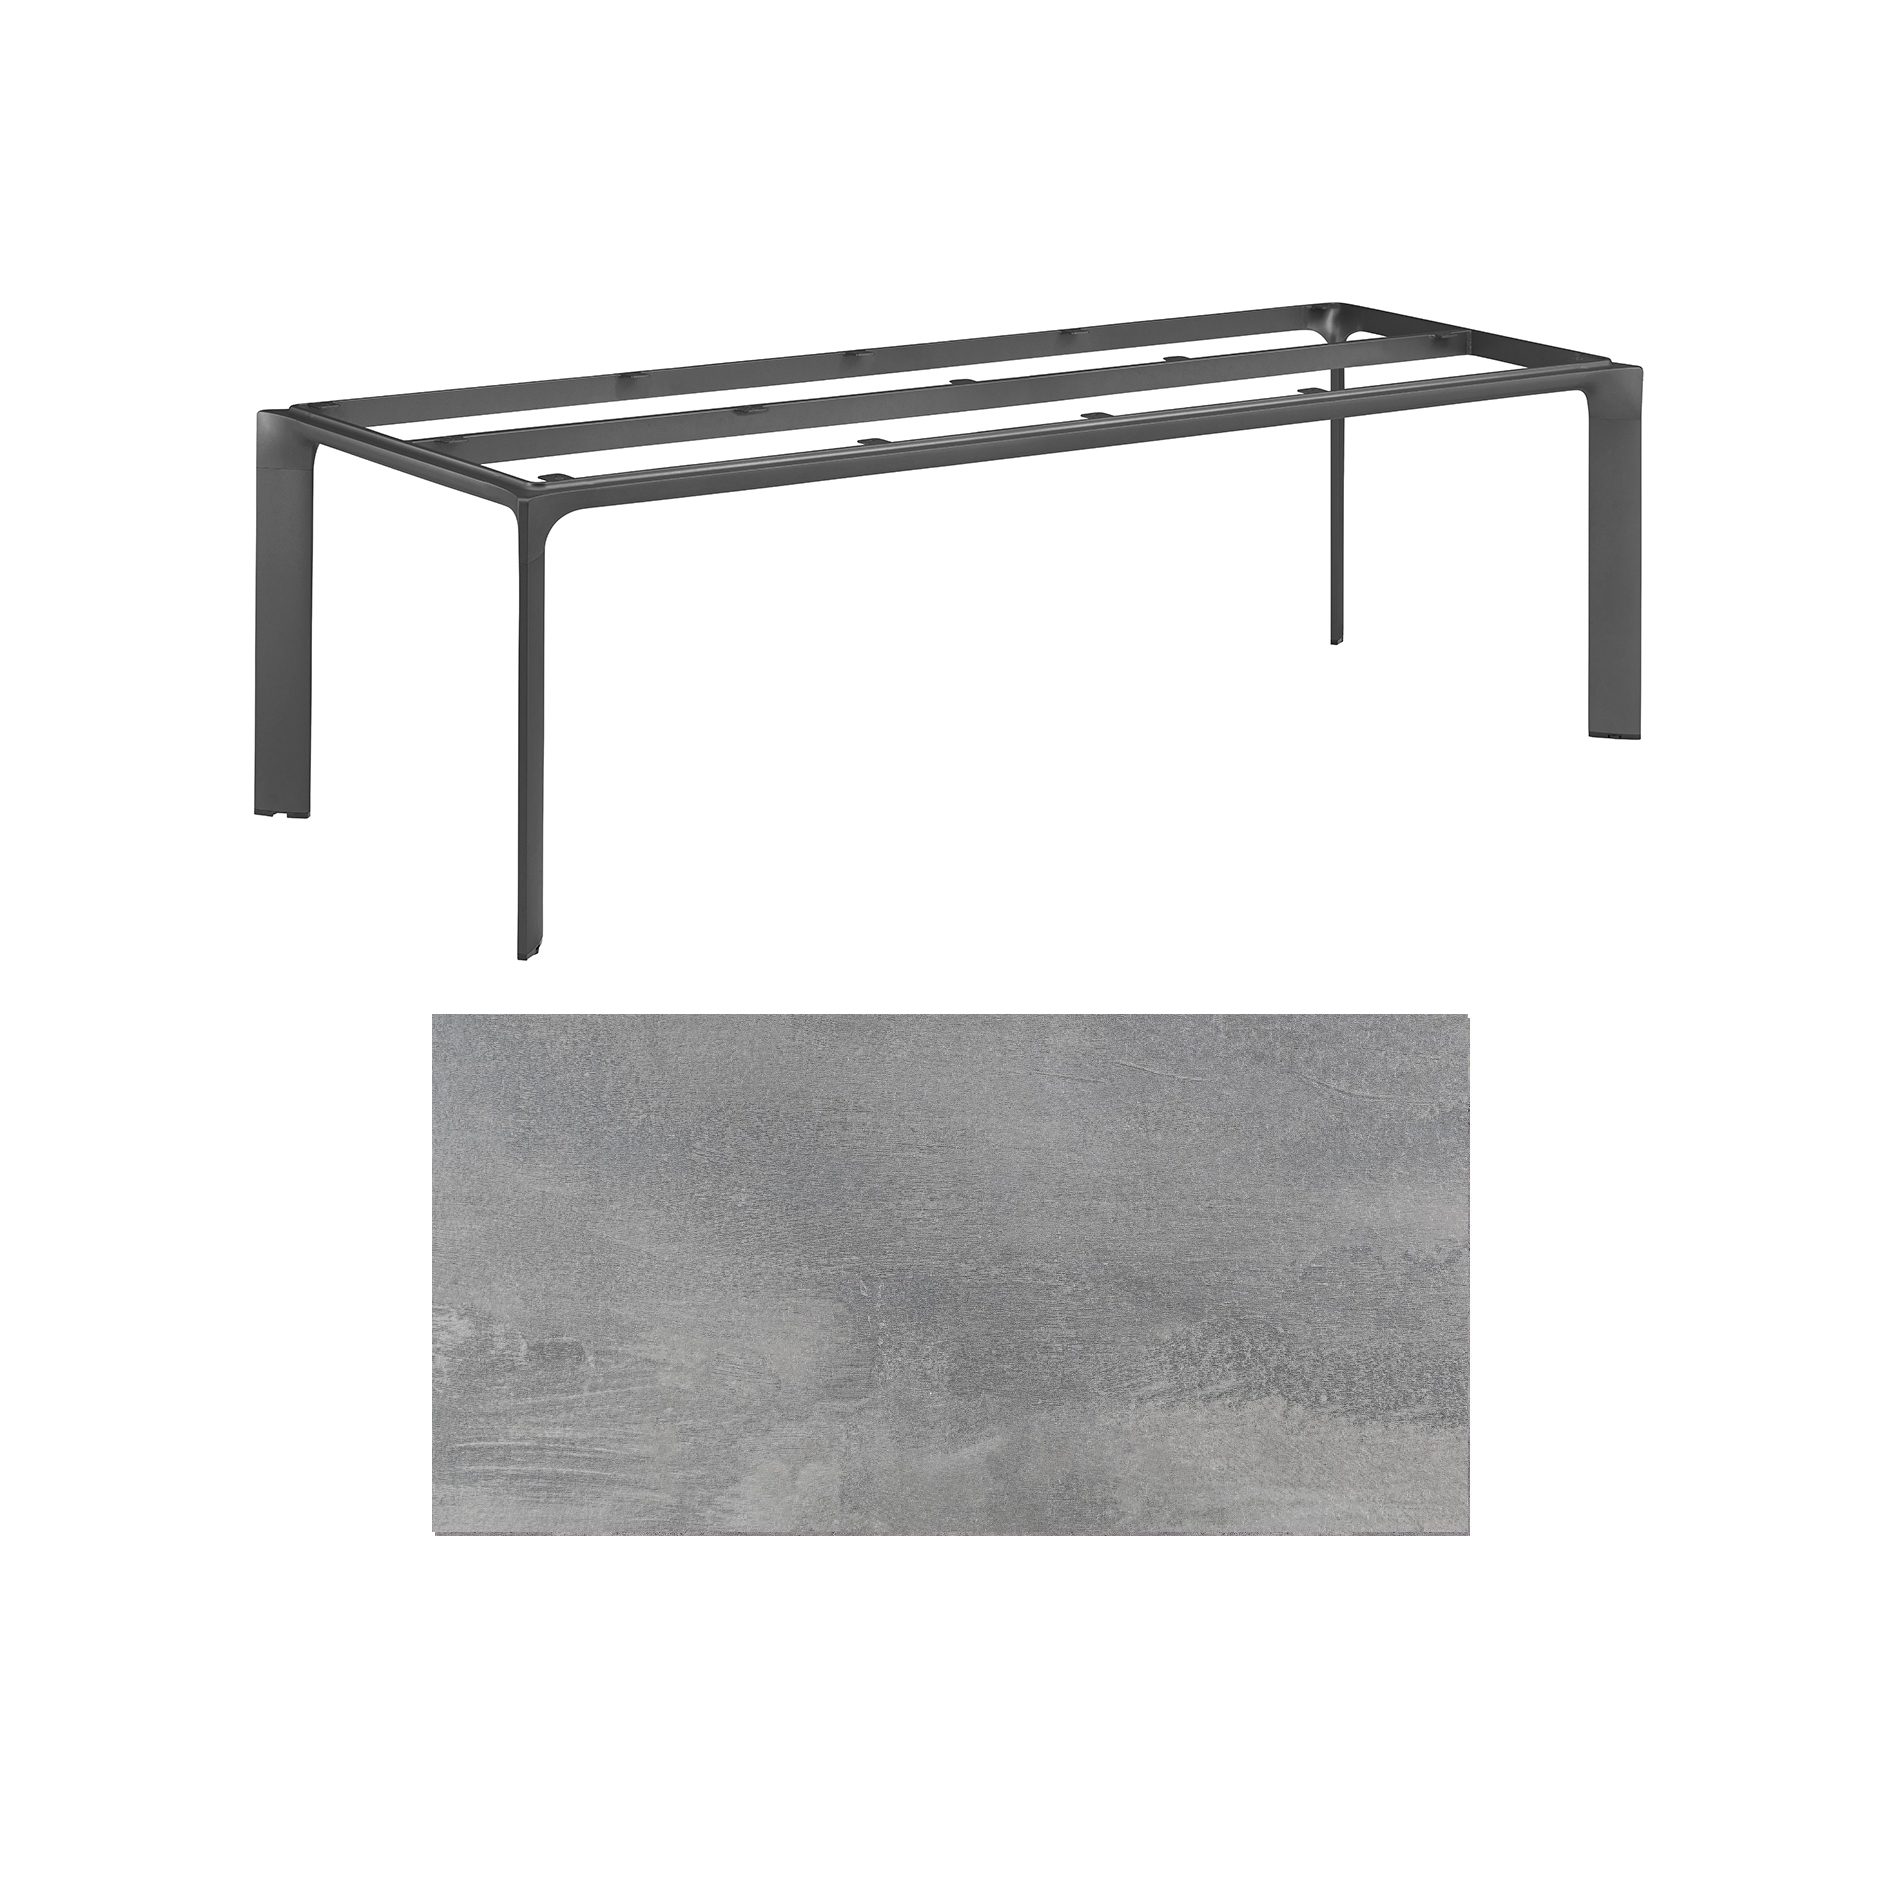 Kettler "Diamond" Tischsystem Gartentisch, Gestell Aluminium anthrazit, Tischplatte HPL silber-grau, 220x95 cm